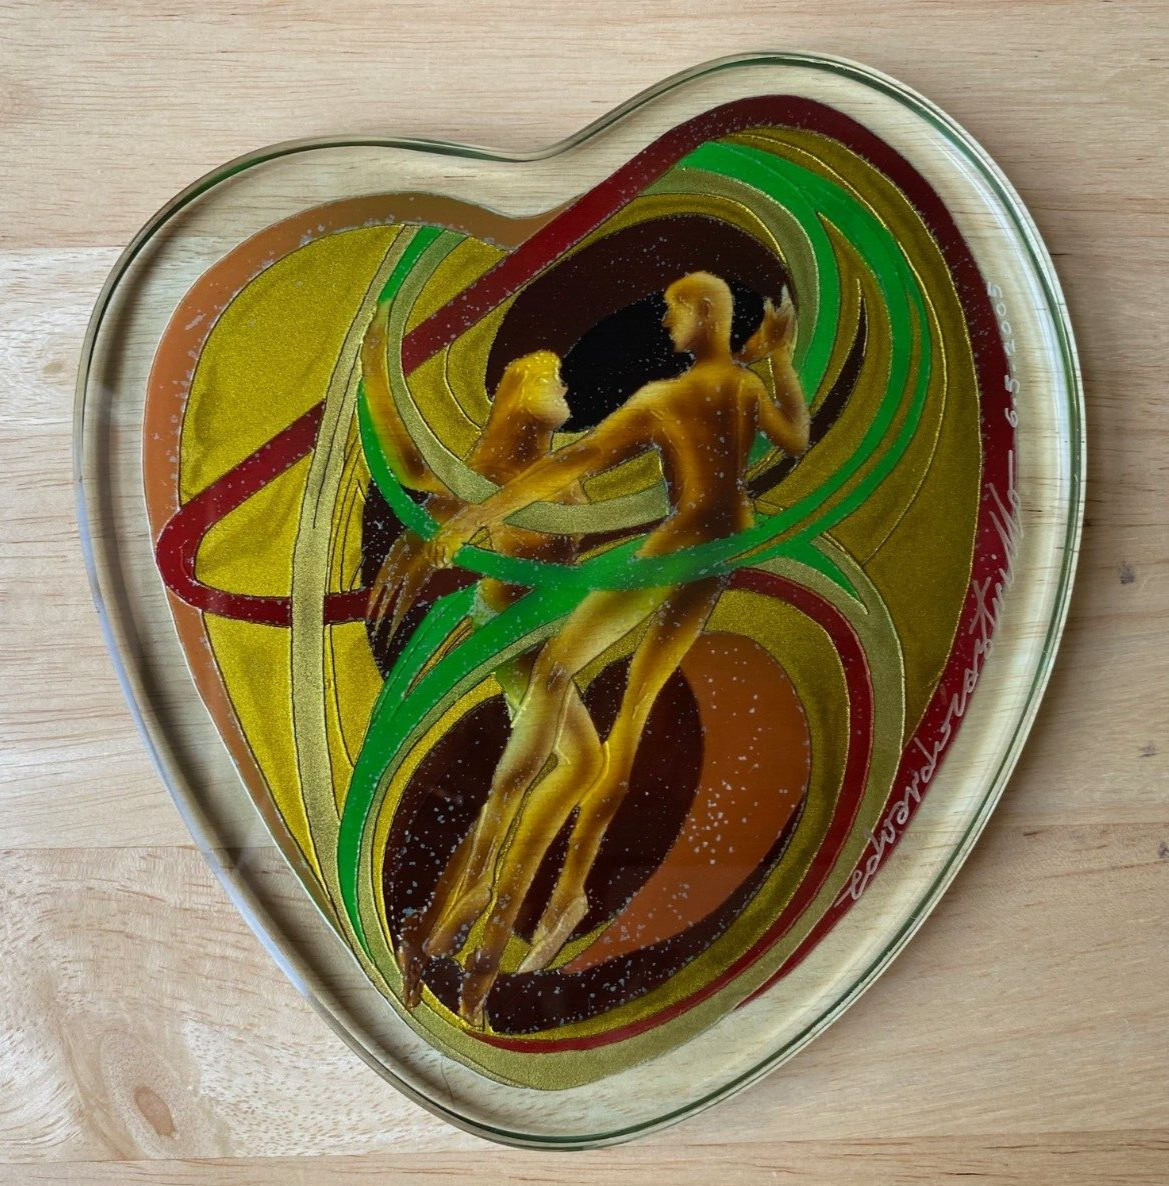 EDUARDO CASTRILLO Art Glass Heart of Man and Woman Dancing - Signed 2005